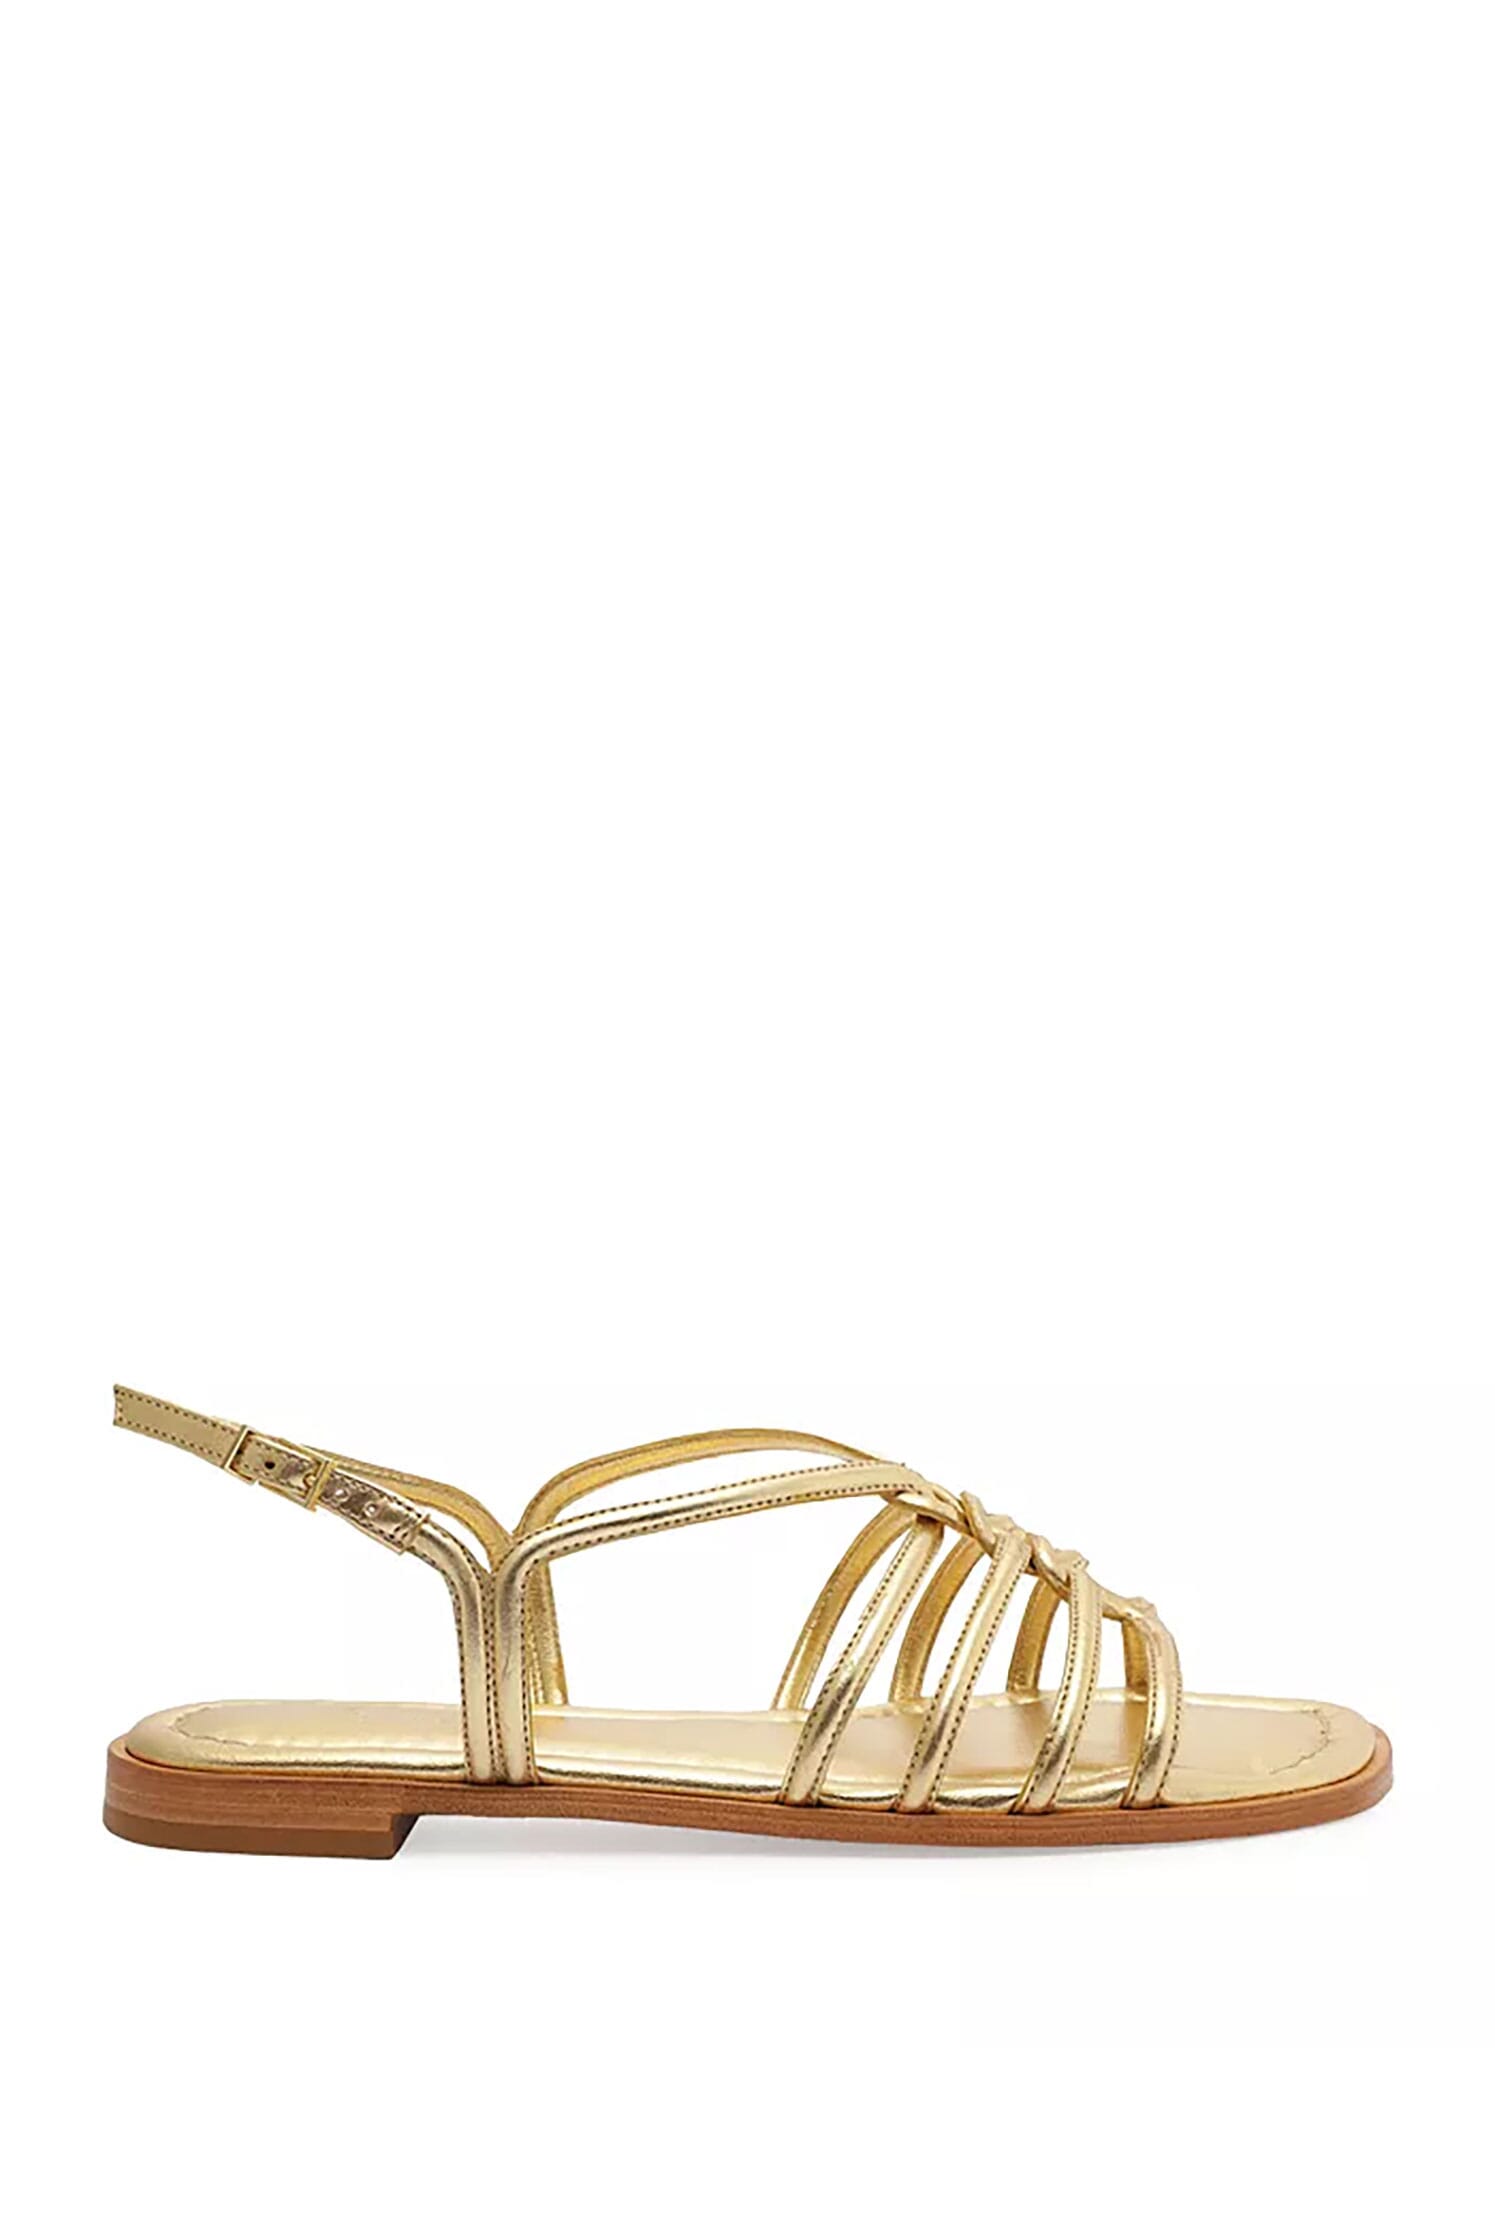 Schutz | Octavia Flat Sandal in Ouro | FashionPass